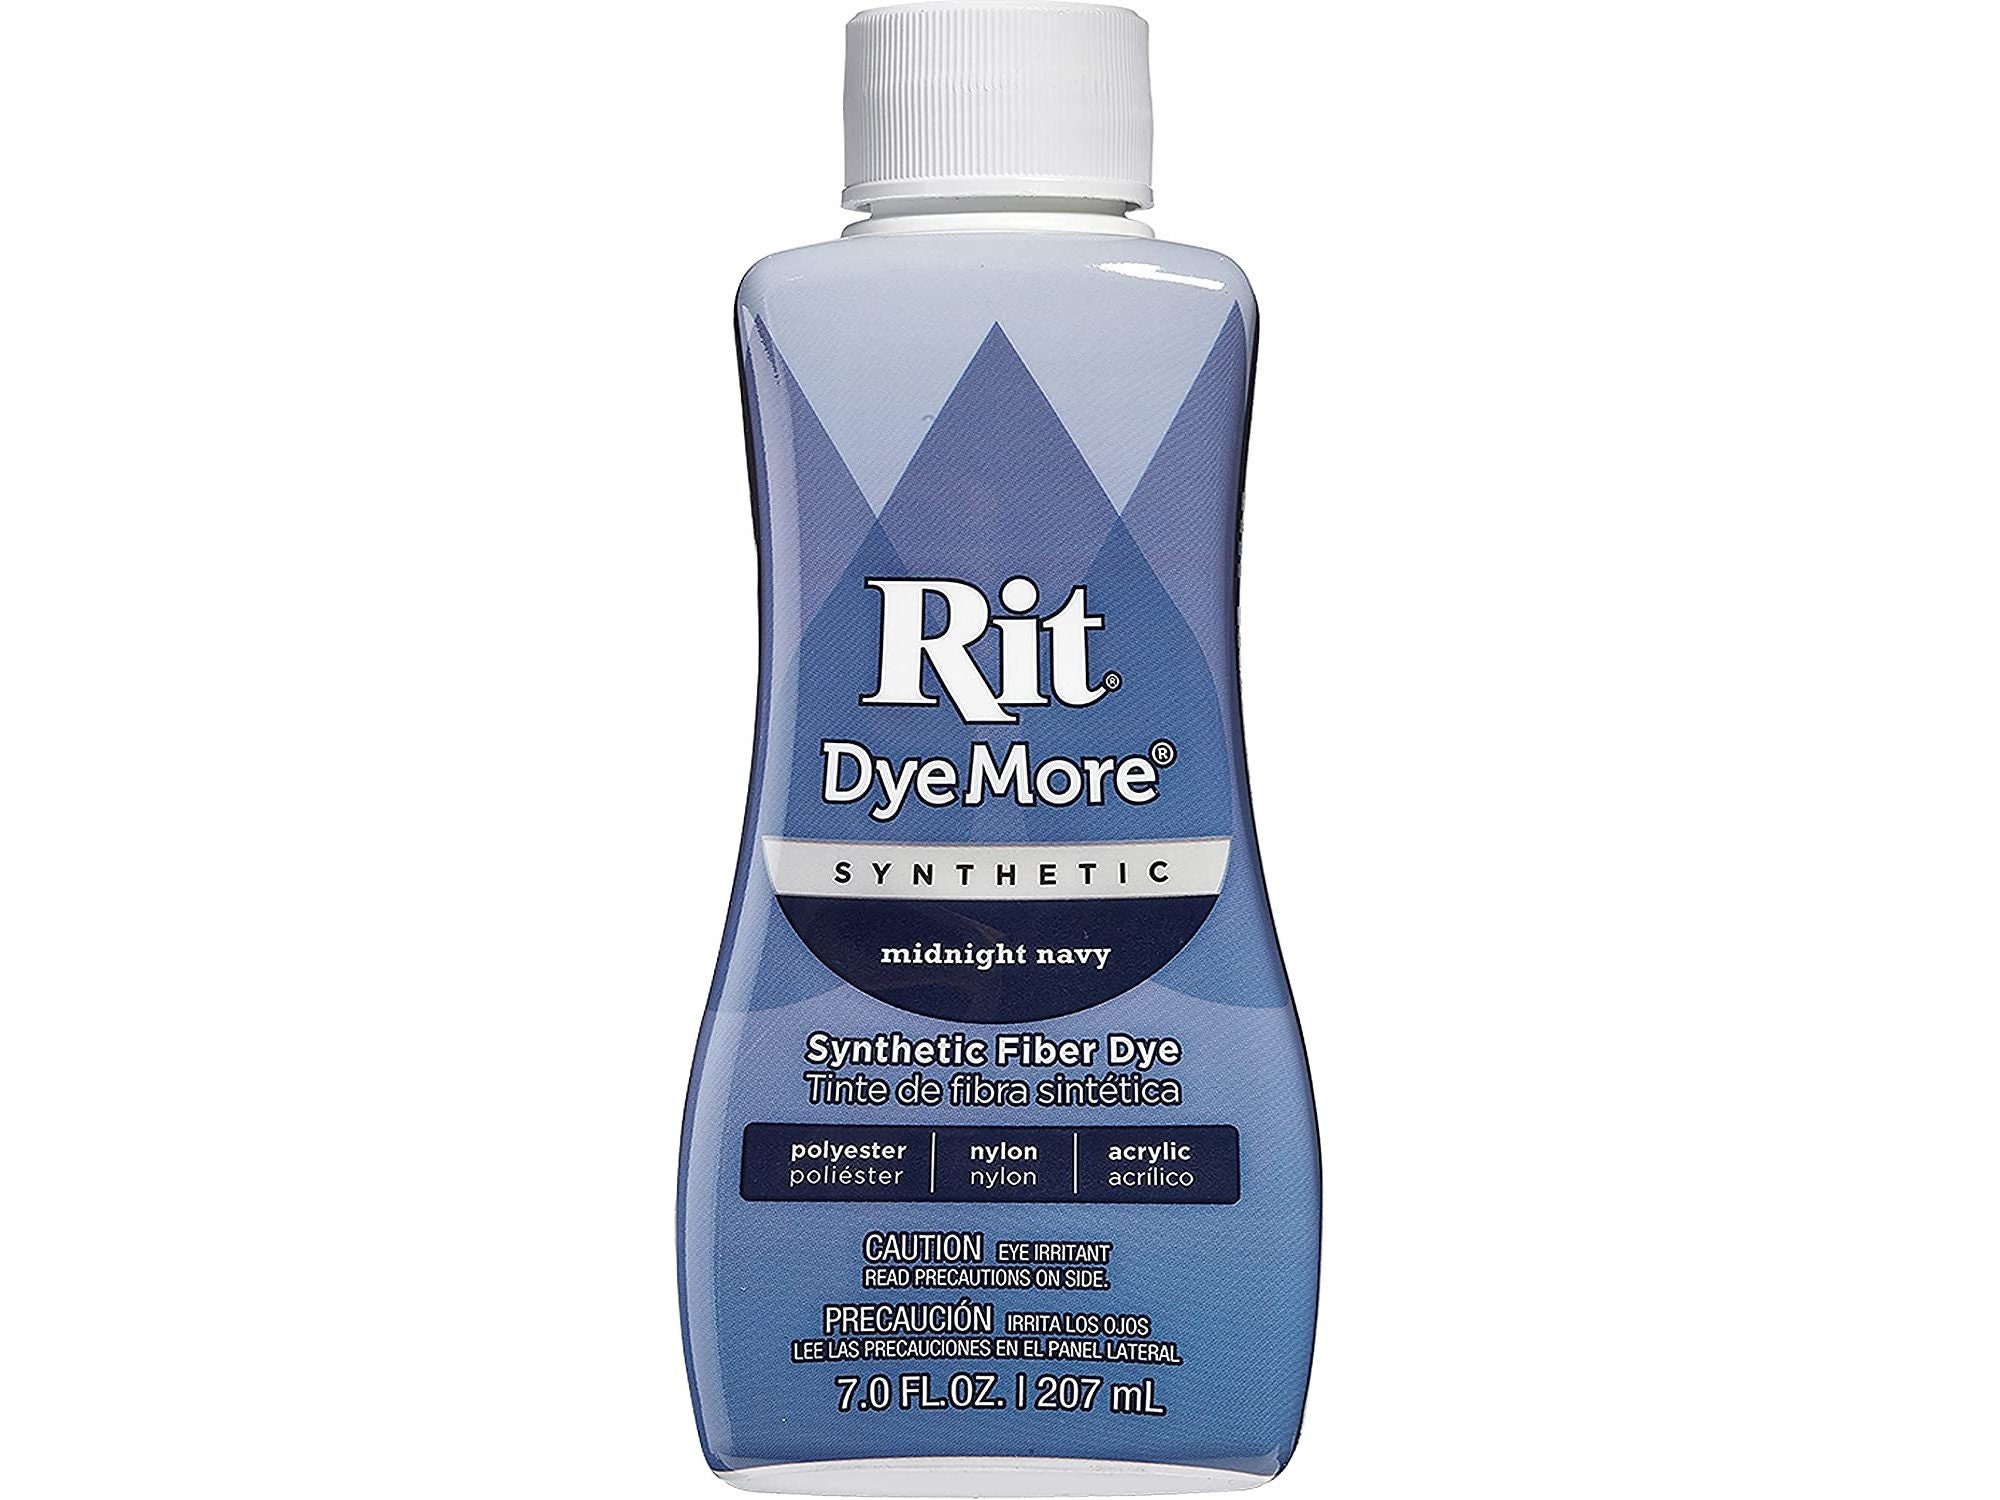 Synthetic Rit Dye More Liquid Fabric Dye Midnight Navy, Pixiss Rit